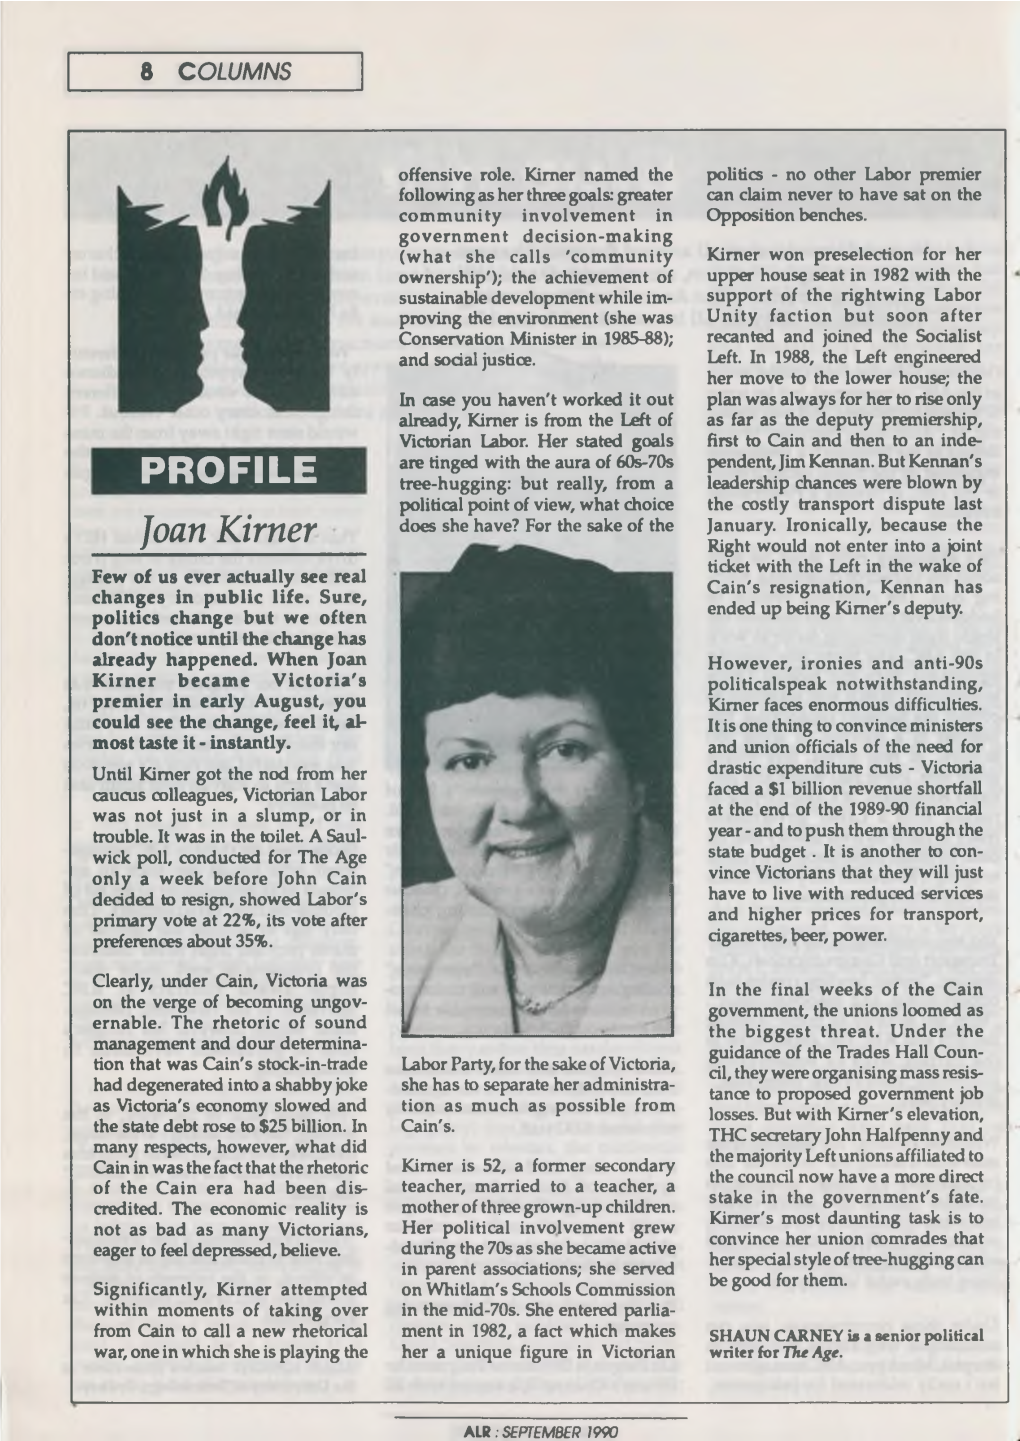 Profile: Joan Kirner